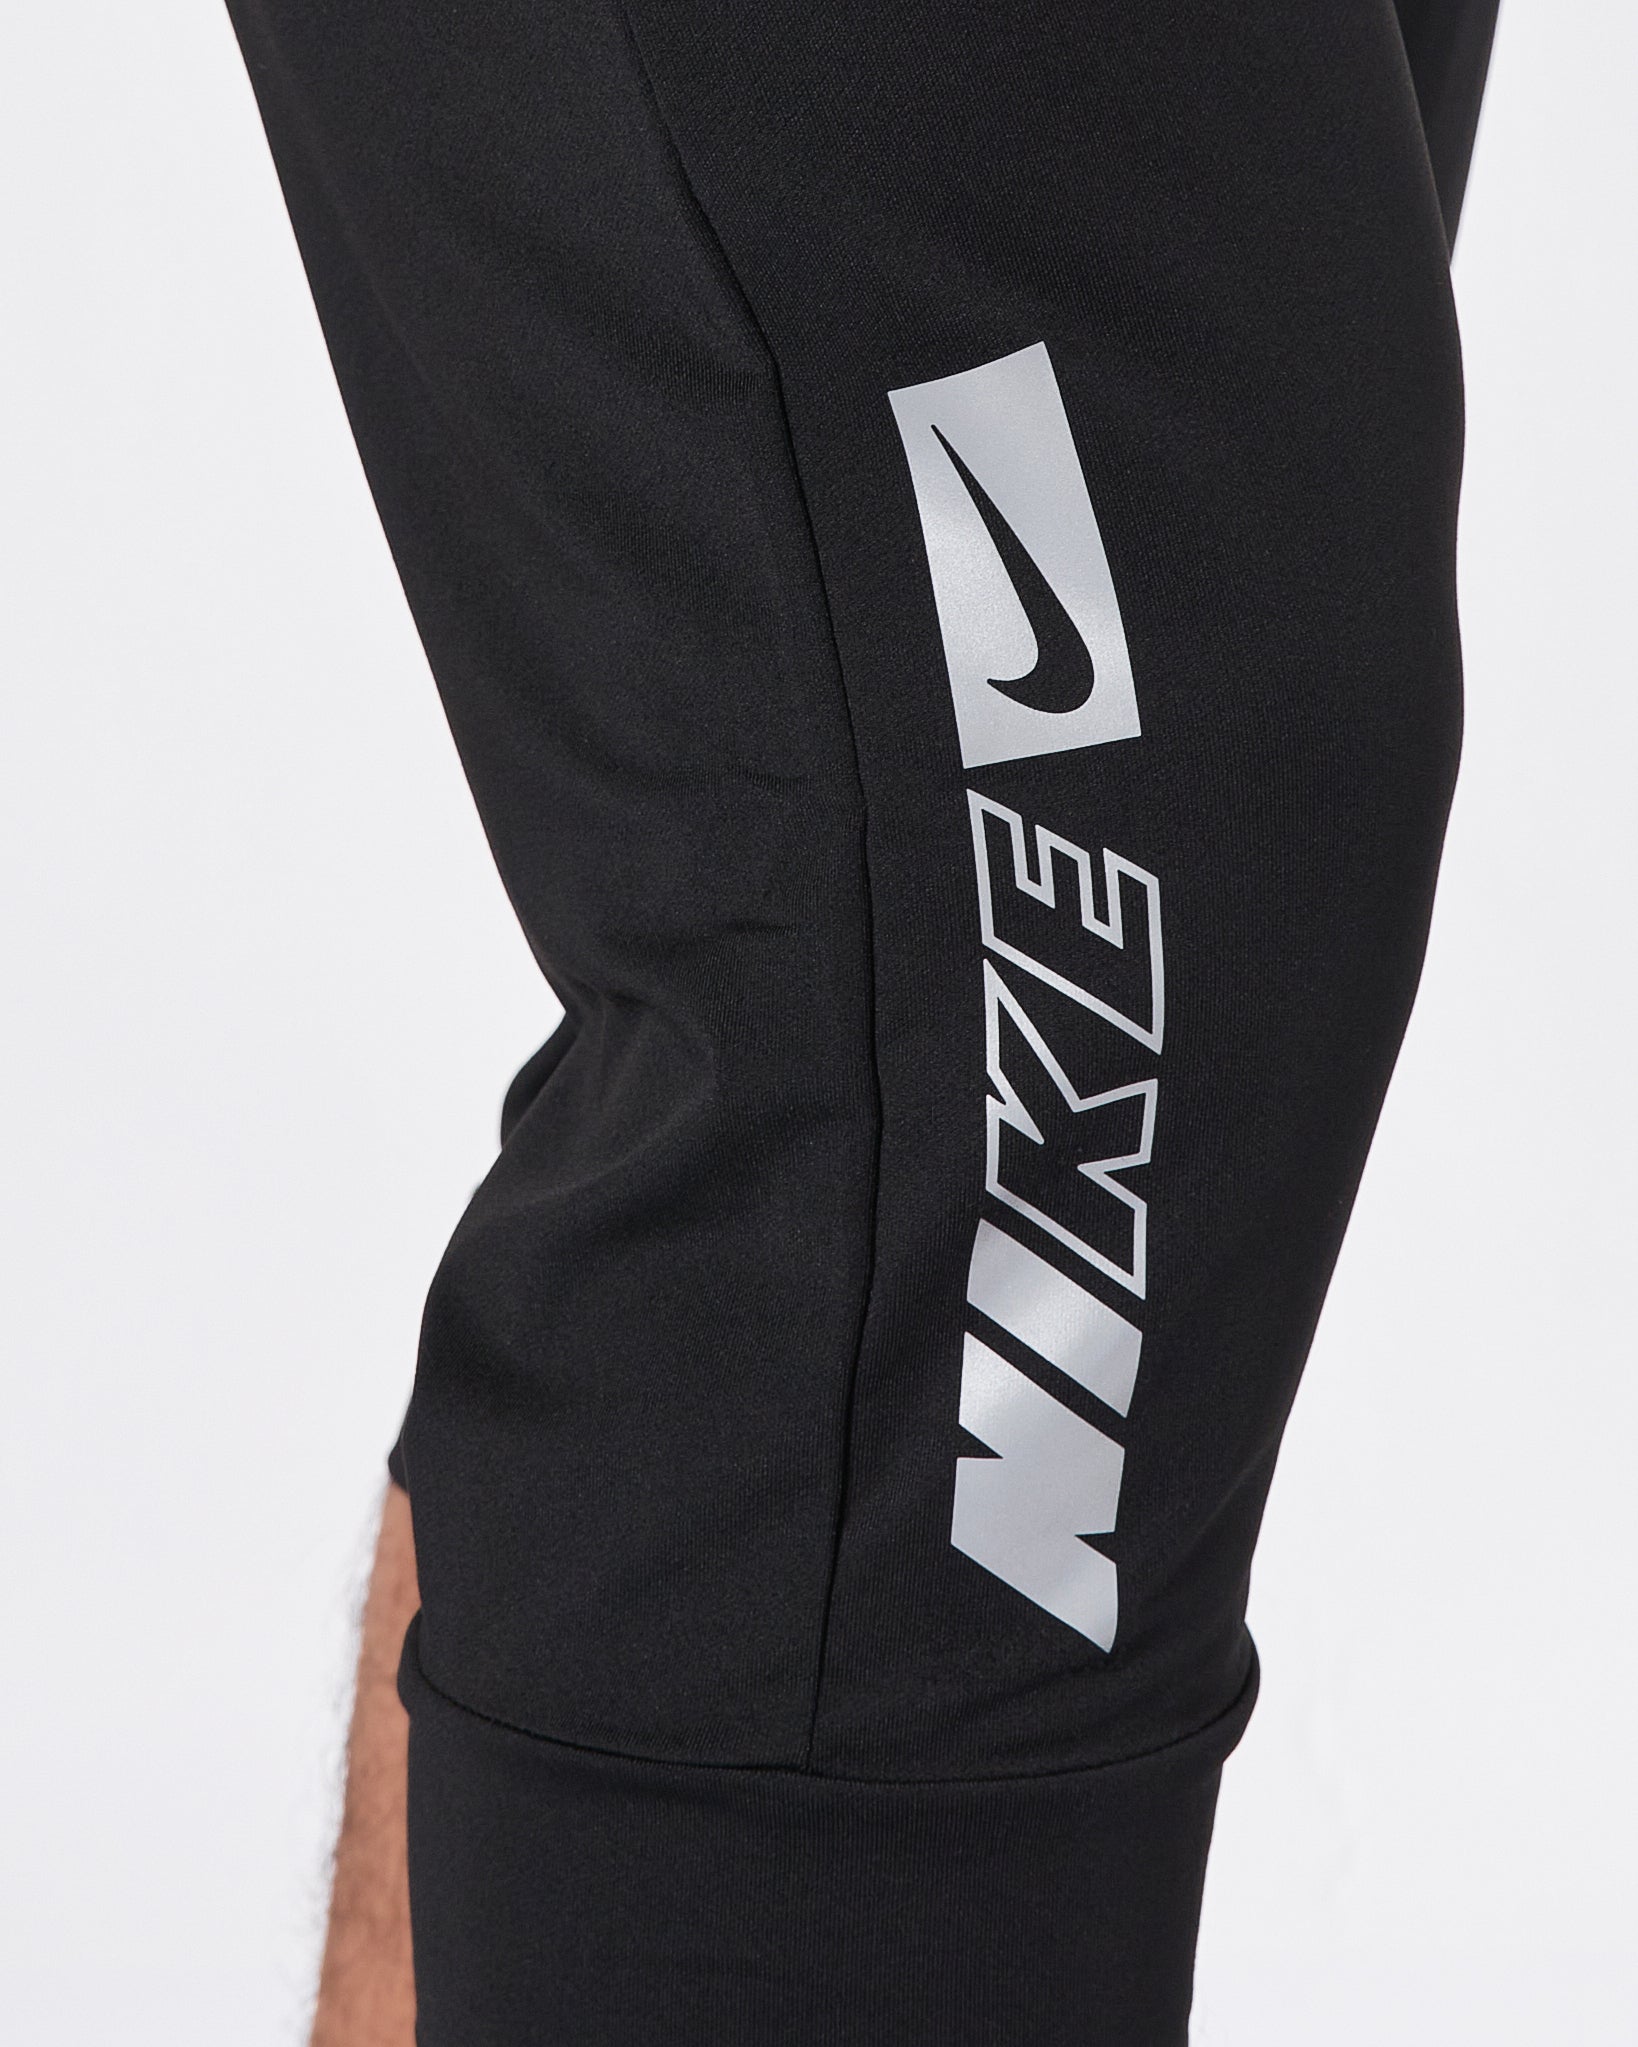 NIK Logo Printed Mid Length Men Black Track Pants 15.90